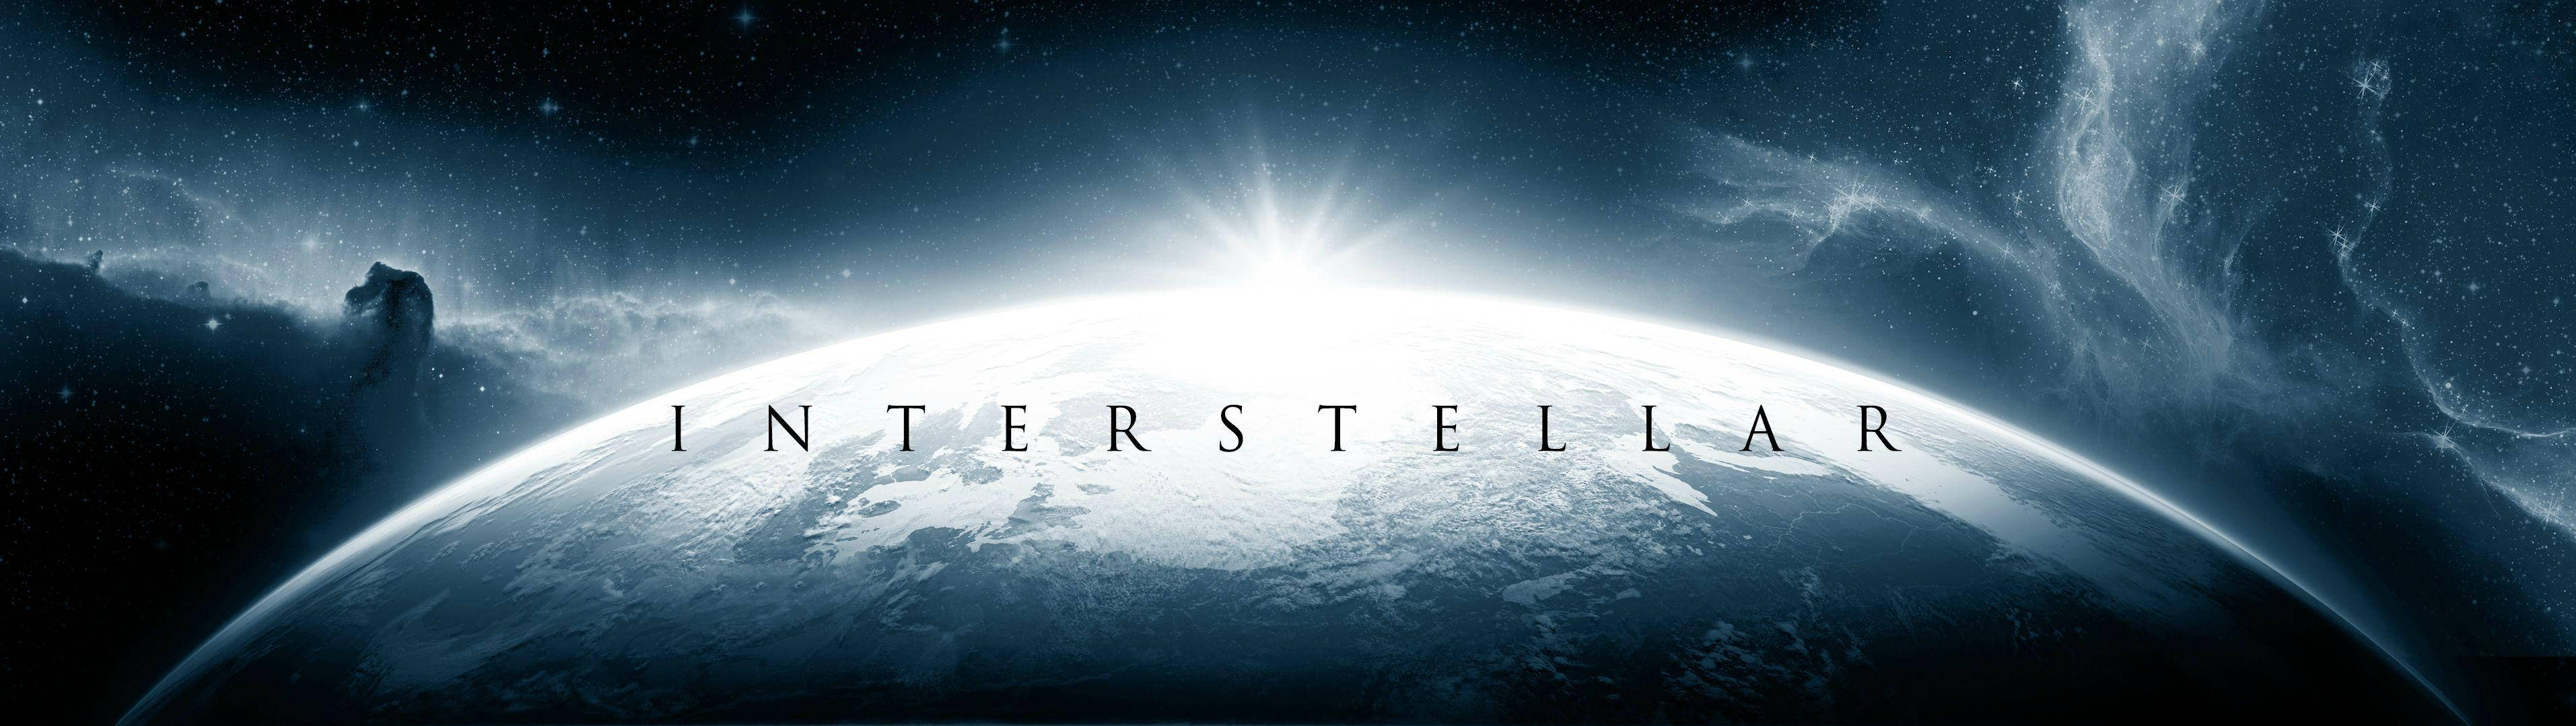 Interstellar Earth Top Dual Screen